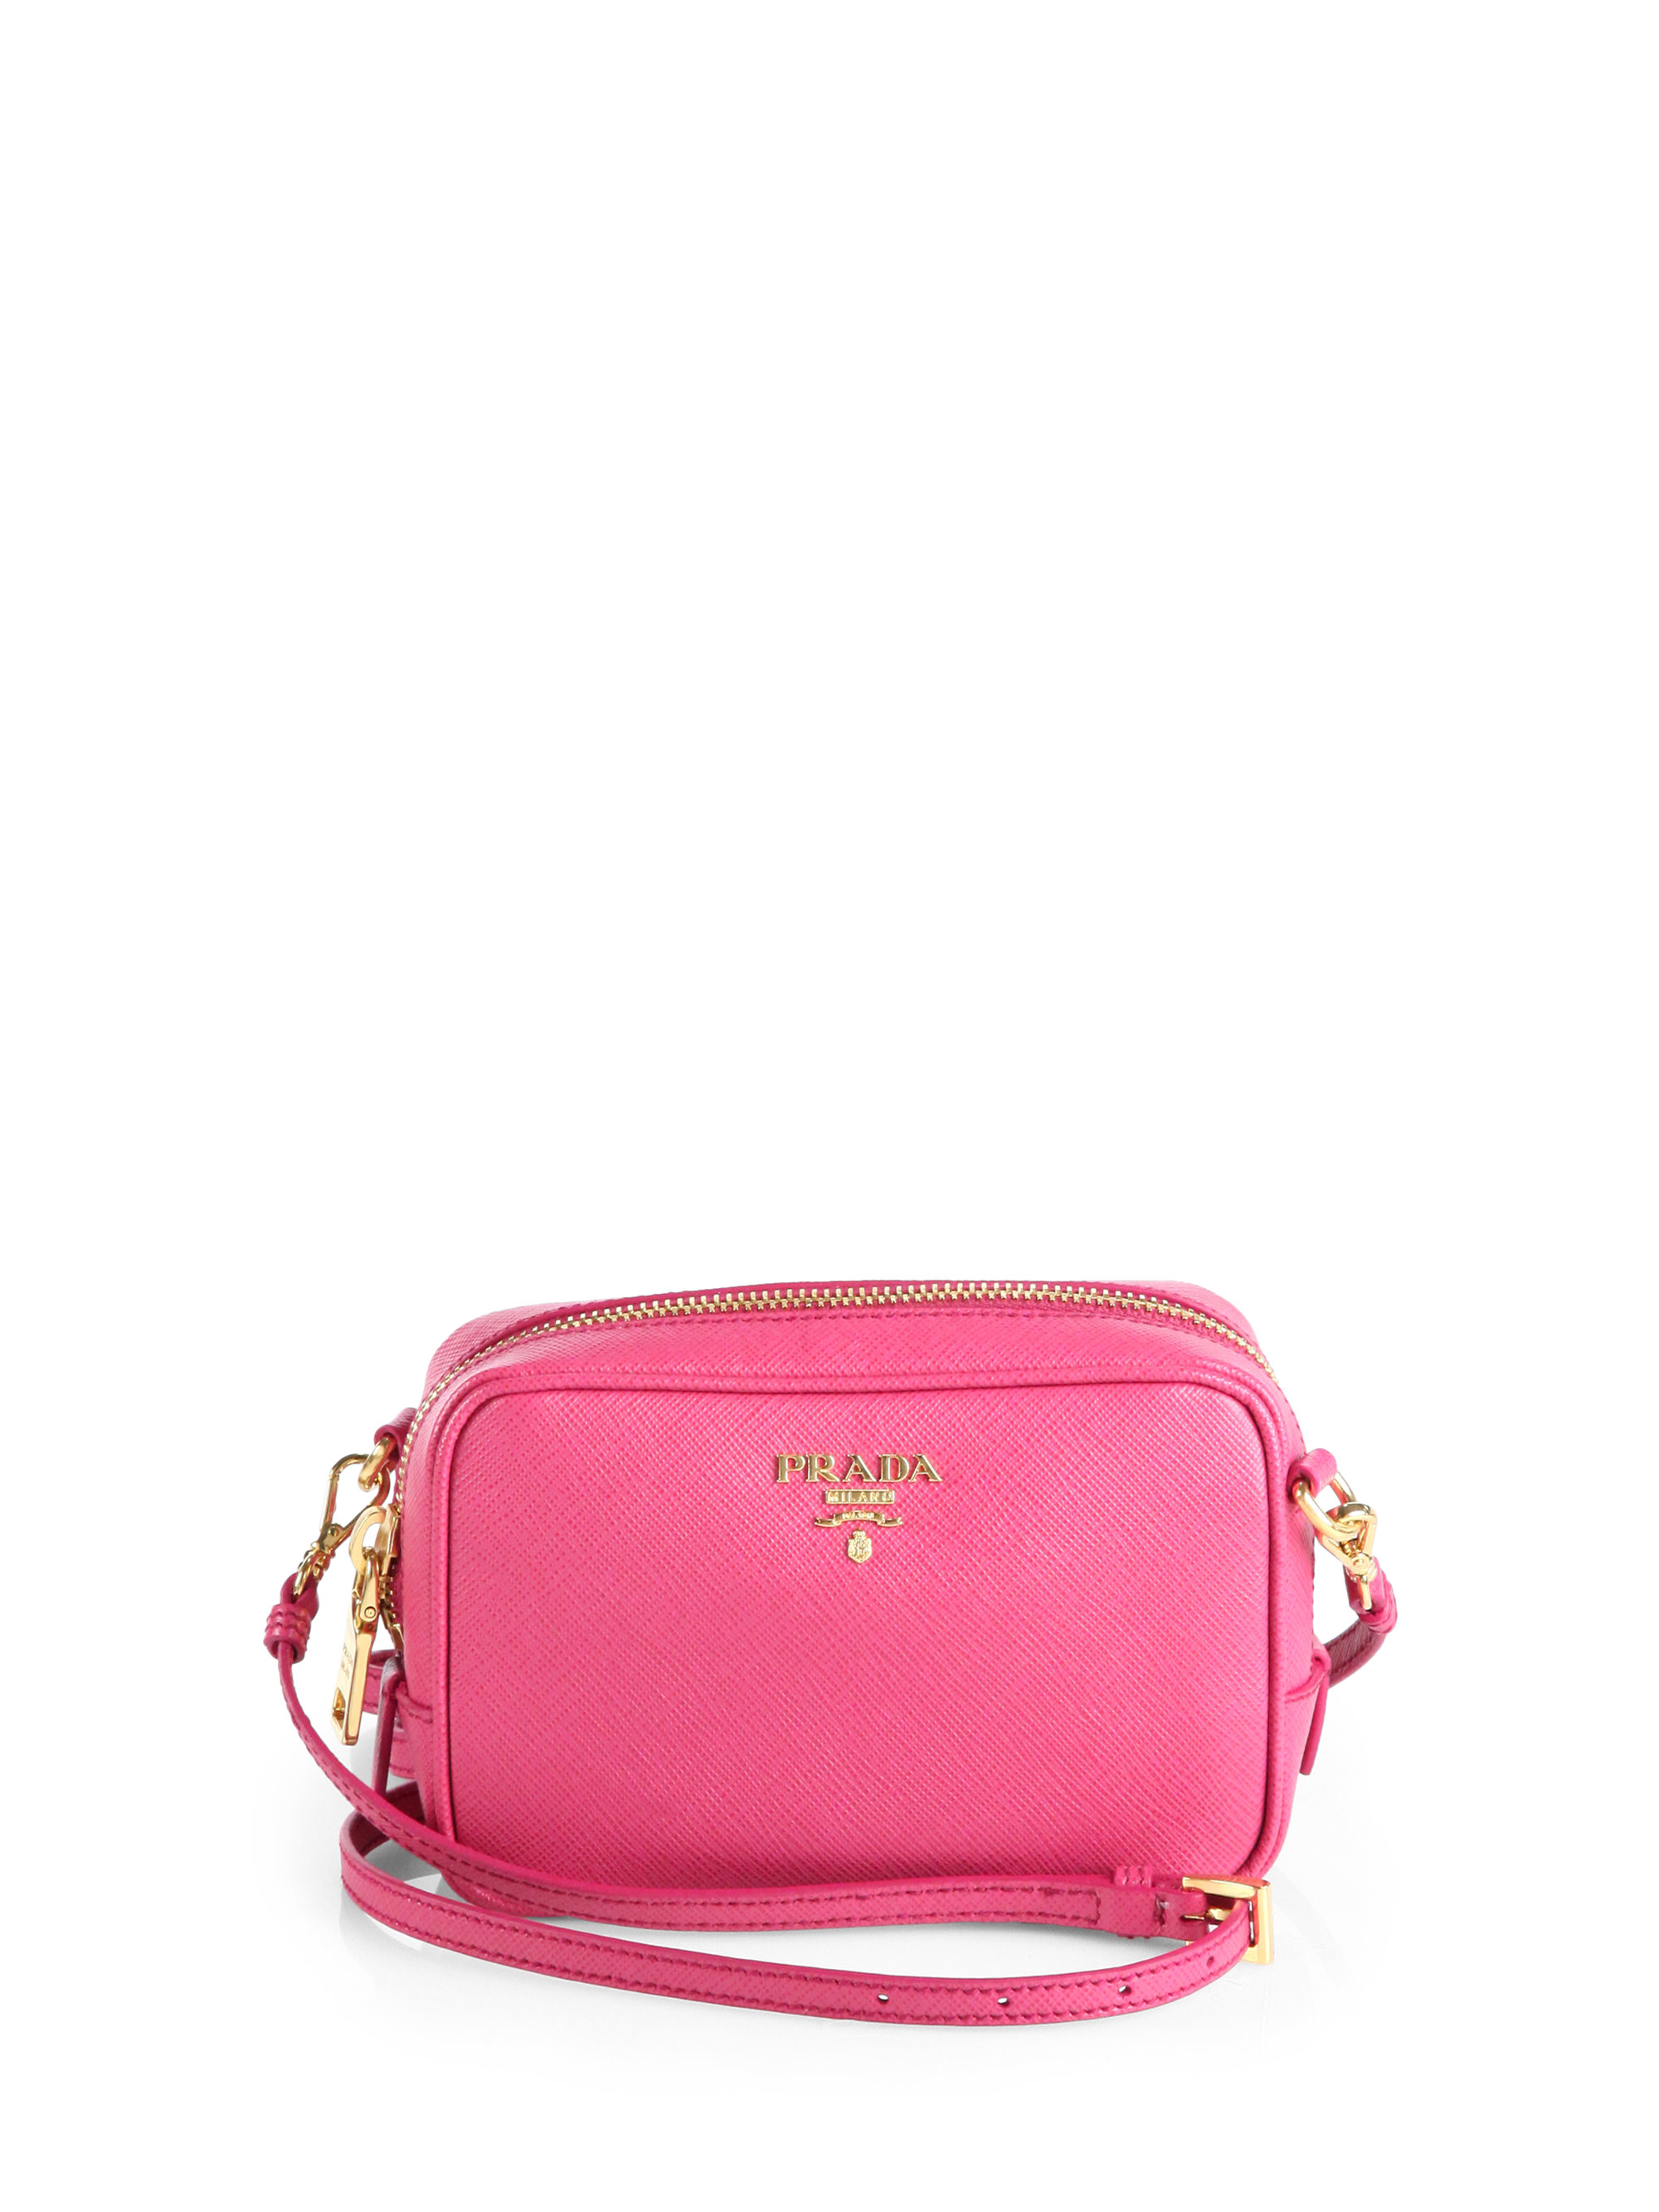 Prada Mini Saffiano Camera Crossbody Bag in Pink (PEONIA-PINK) | Lyst